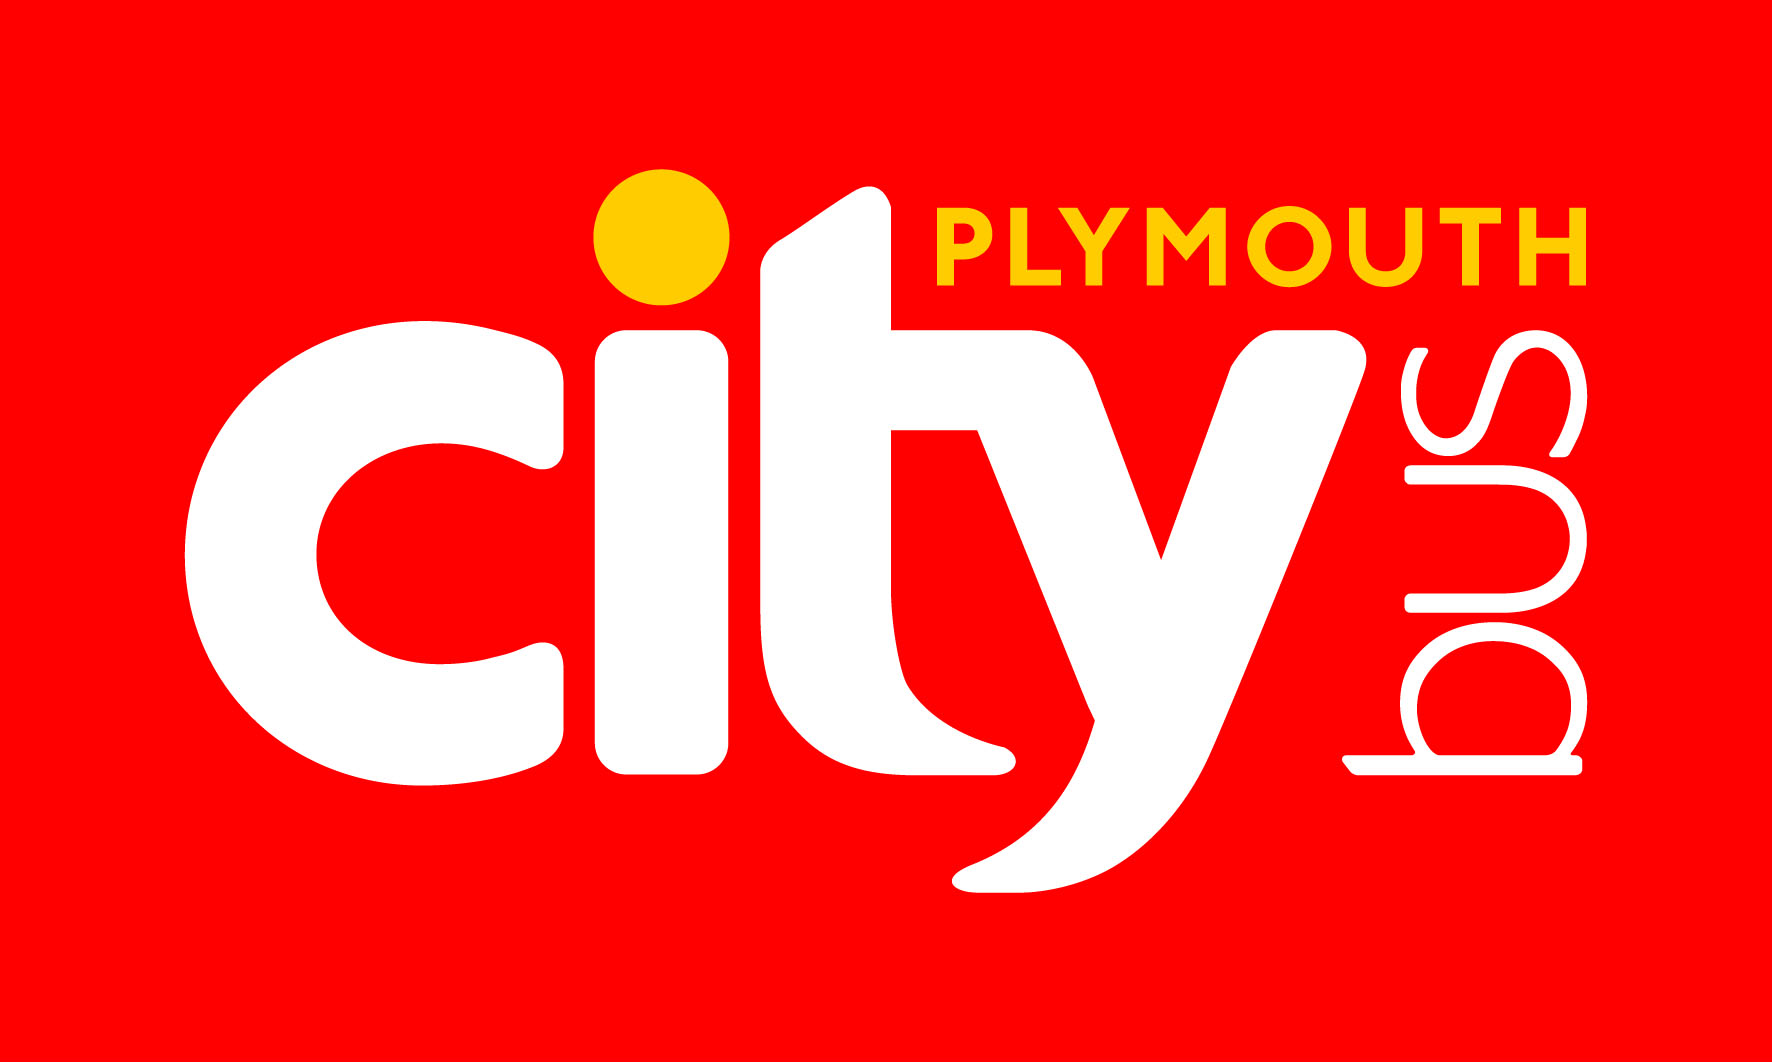 Plymouth Citybus Logo